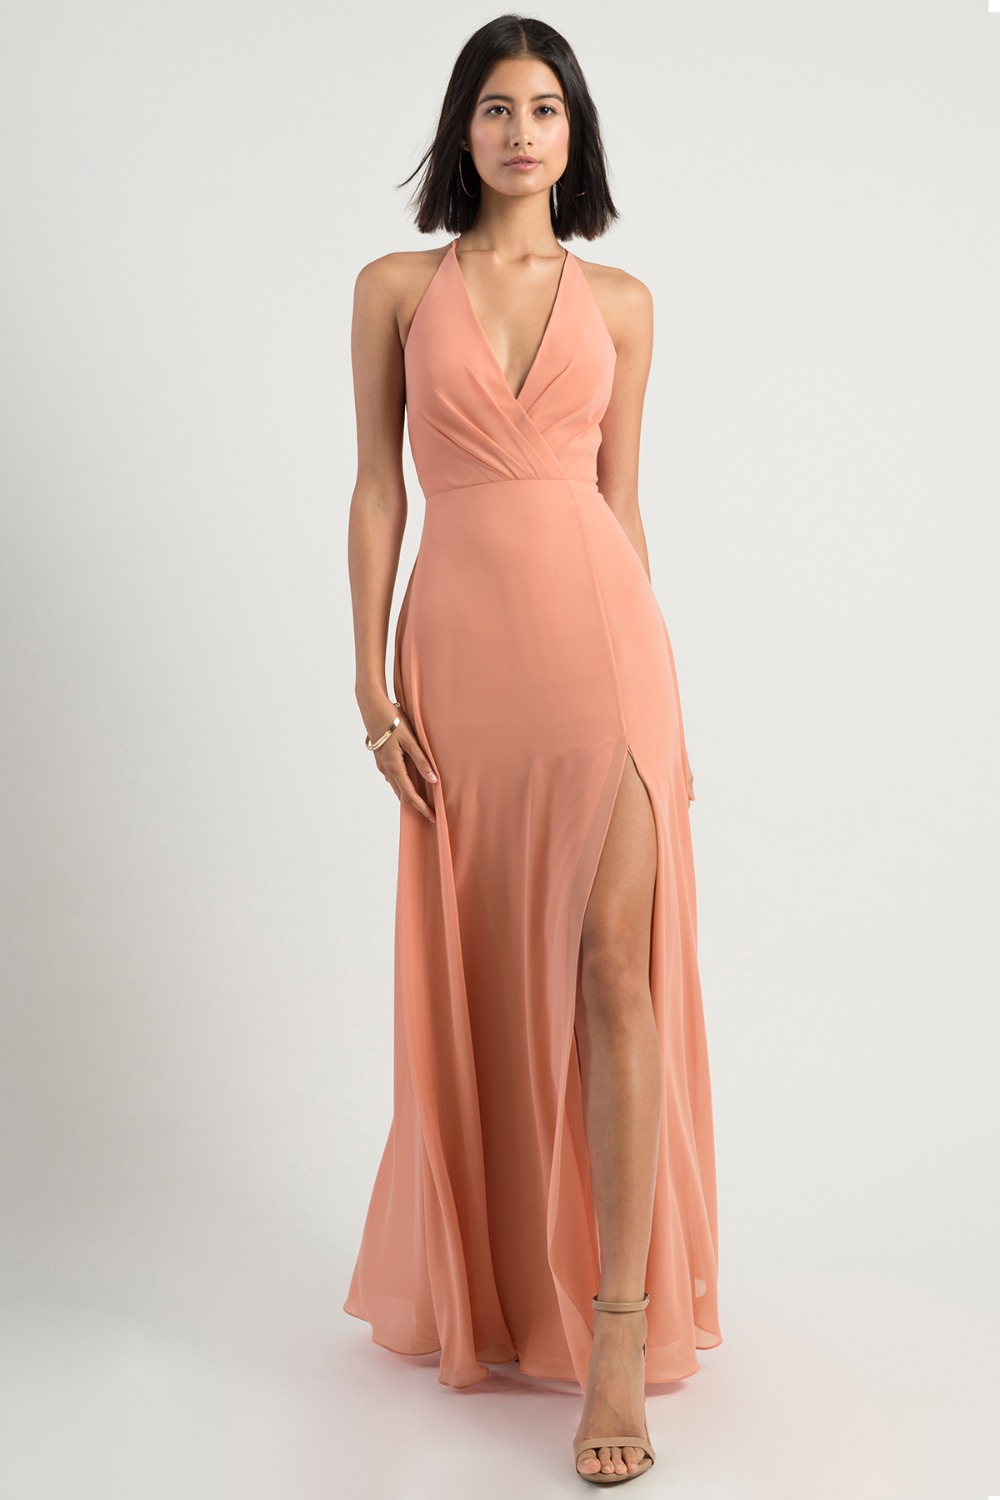 Bryce Sedona Sunset bridesmaid dress by Jenny Yoo